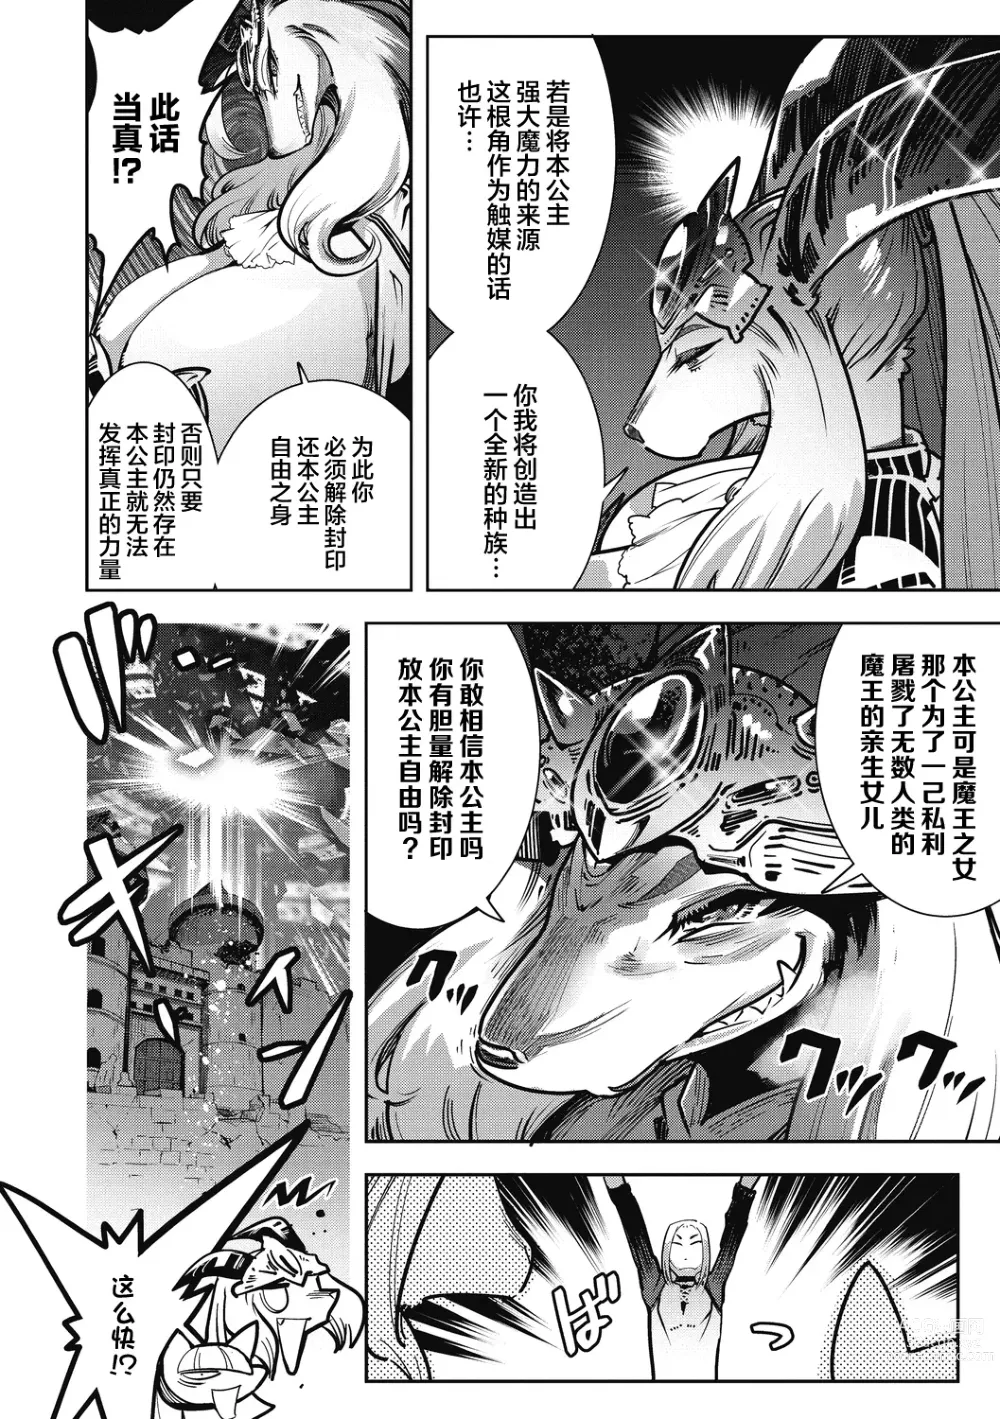 Page 3 of manga Yuusha ha Maou to Koi shitai Saishuuwa